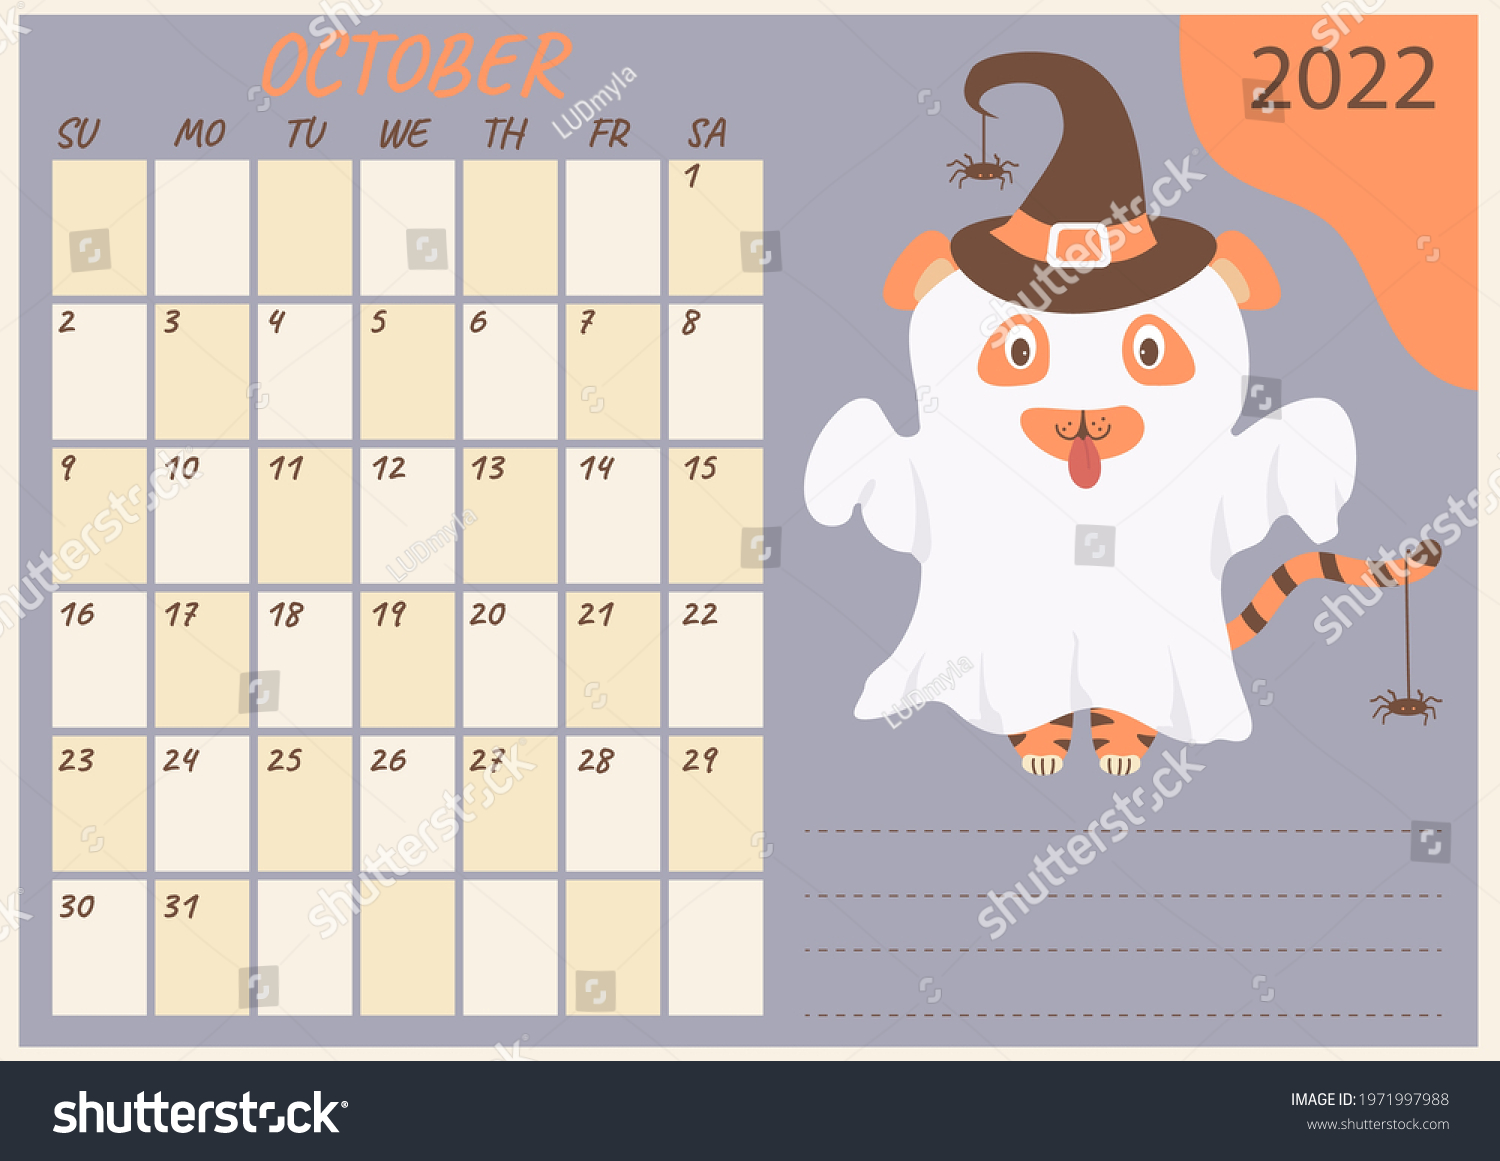 Halloween Calendar 2022 Planner Calendar October 2022 Cute Ghost Stock Vector (Royalty Free)  1971997988